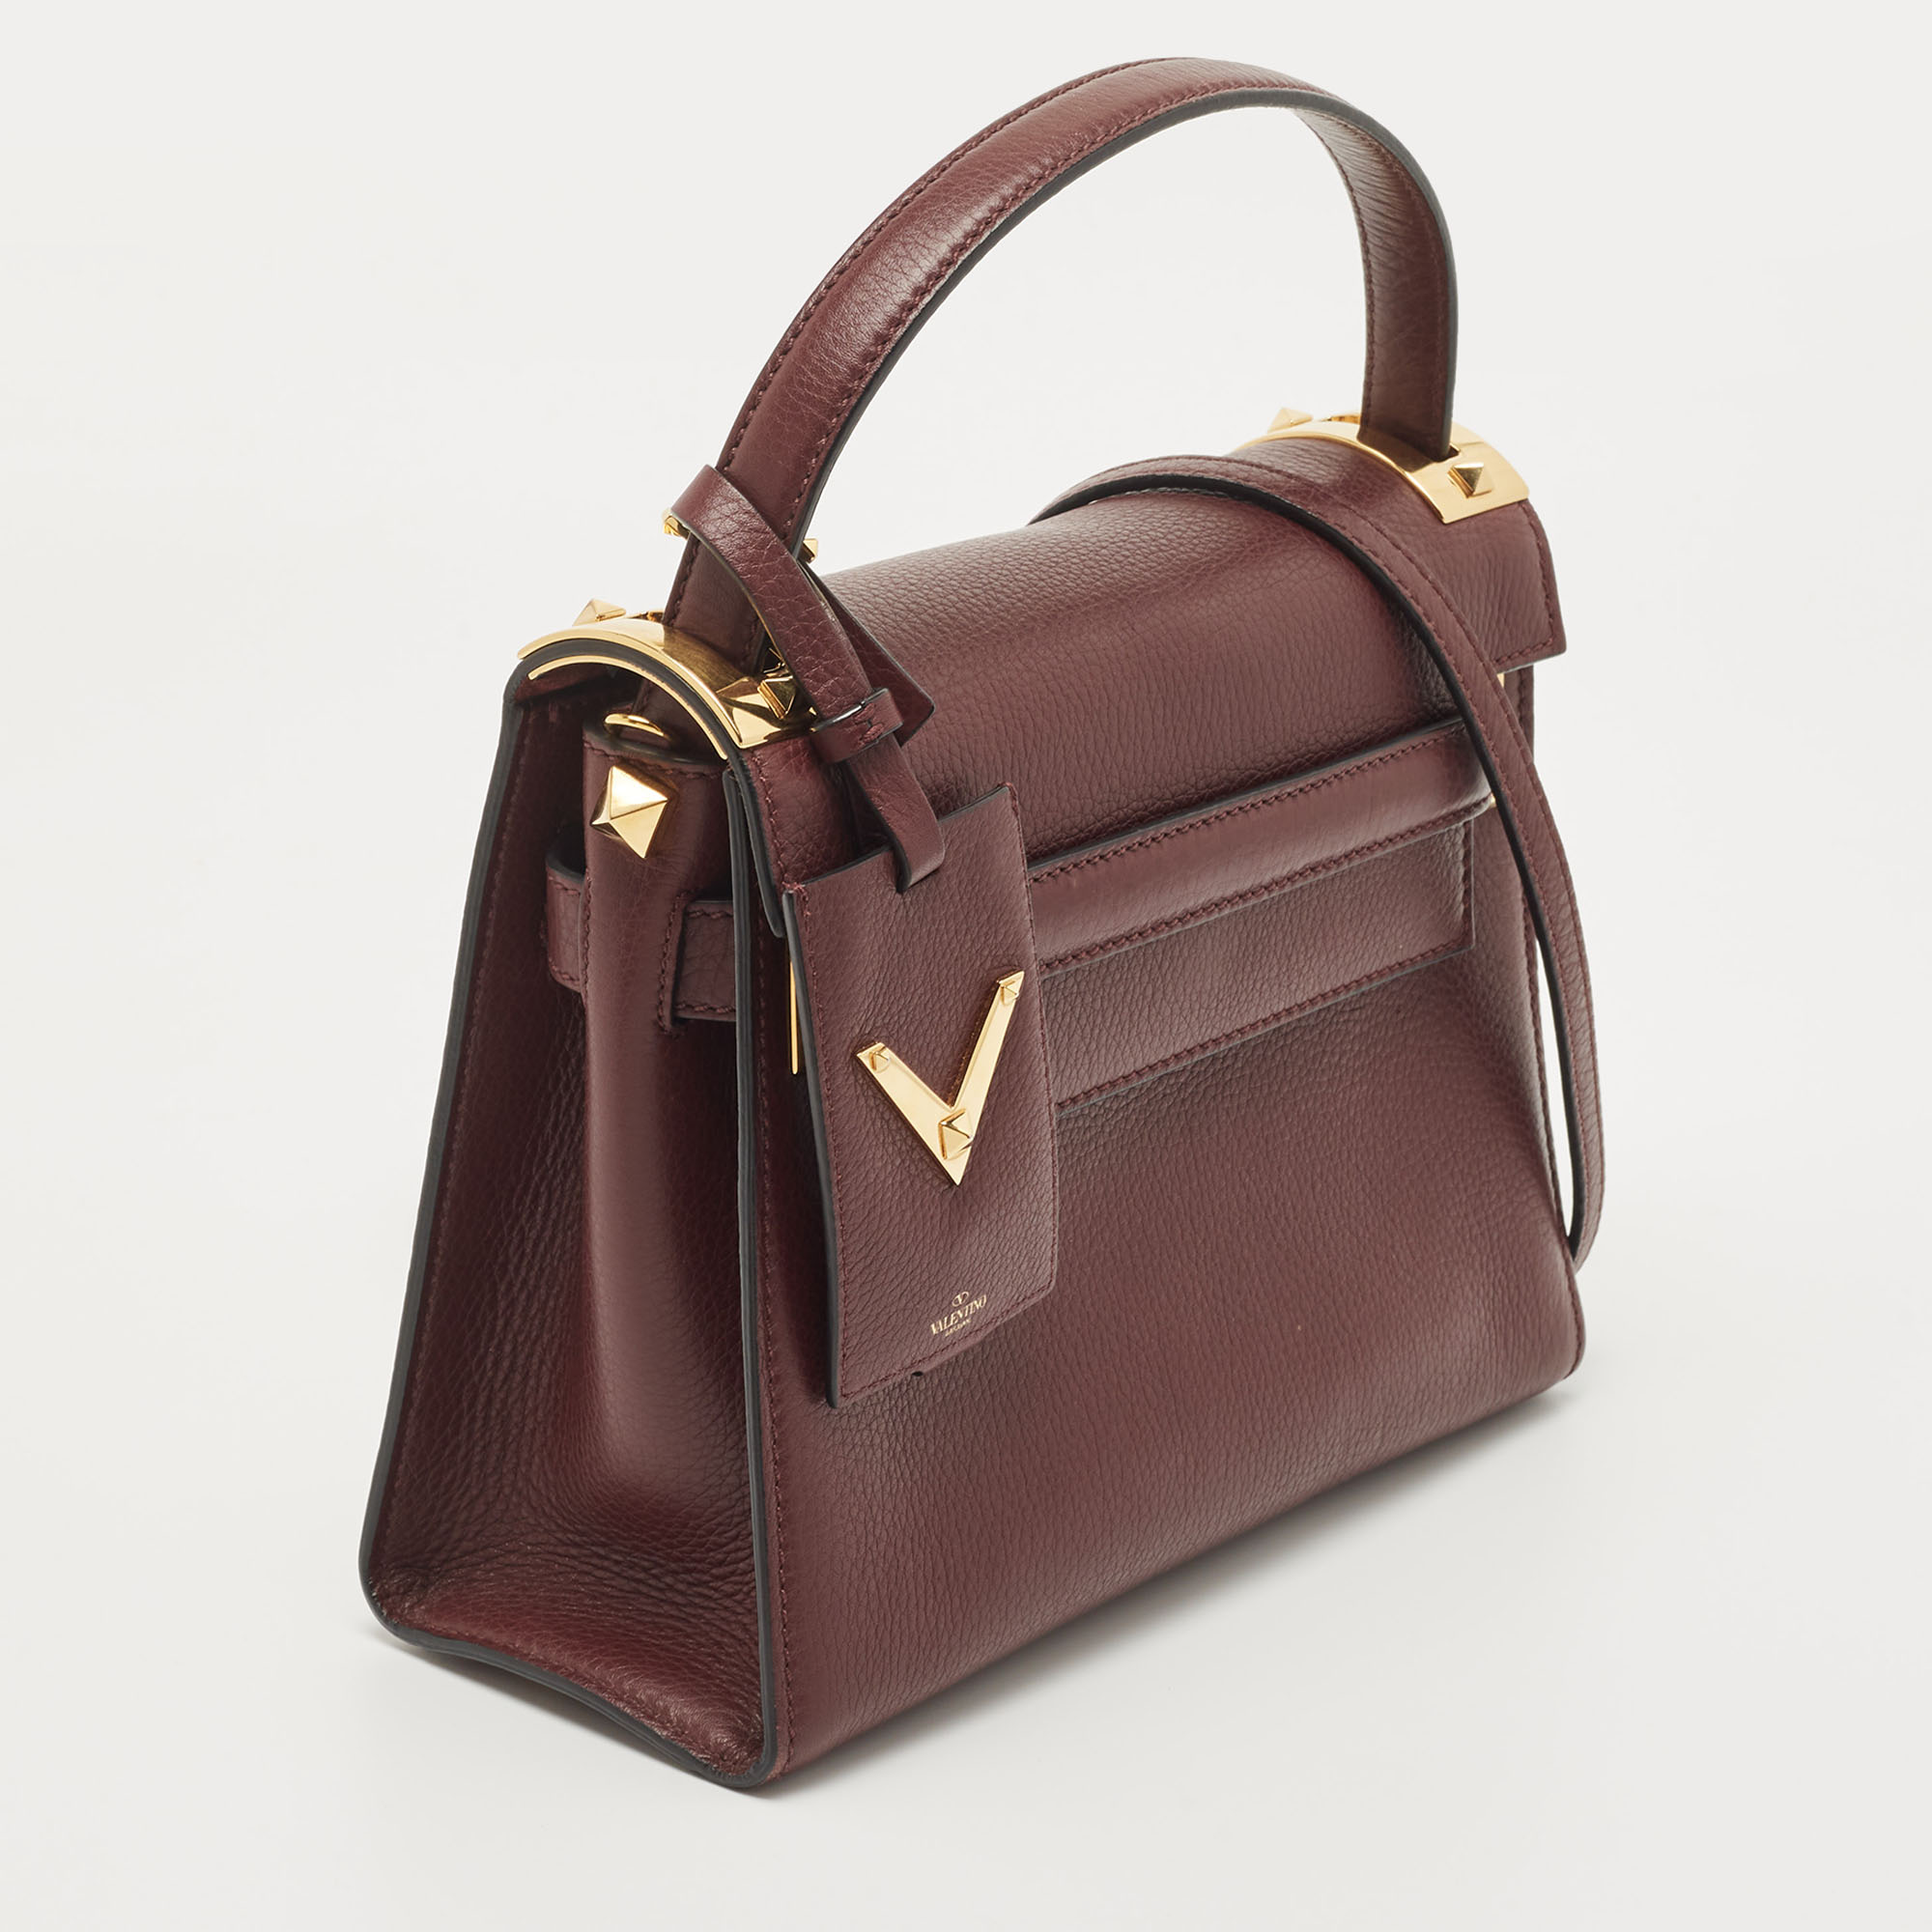 Valentino Burgundy Leather Flap Top Handle Bag